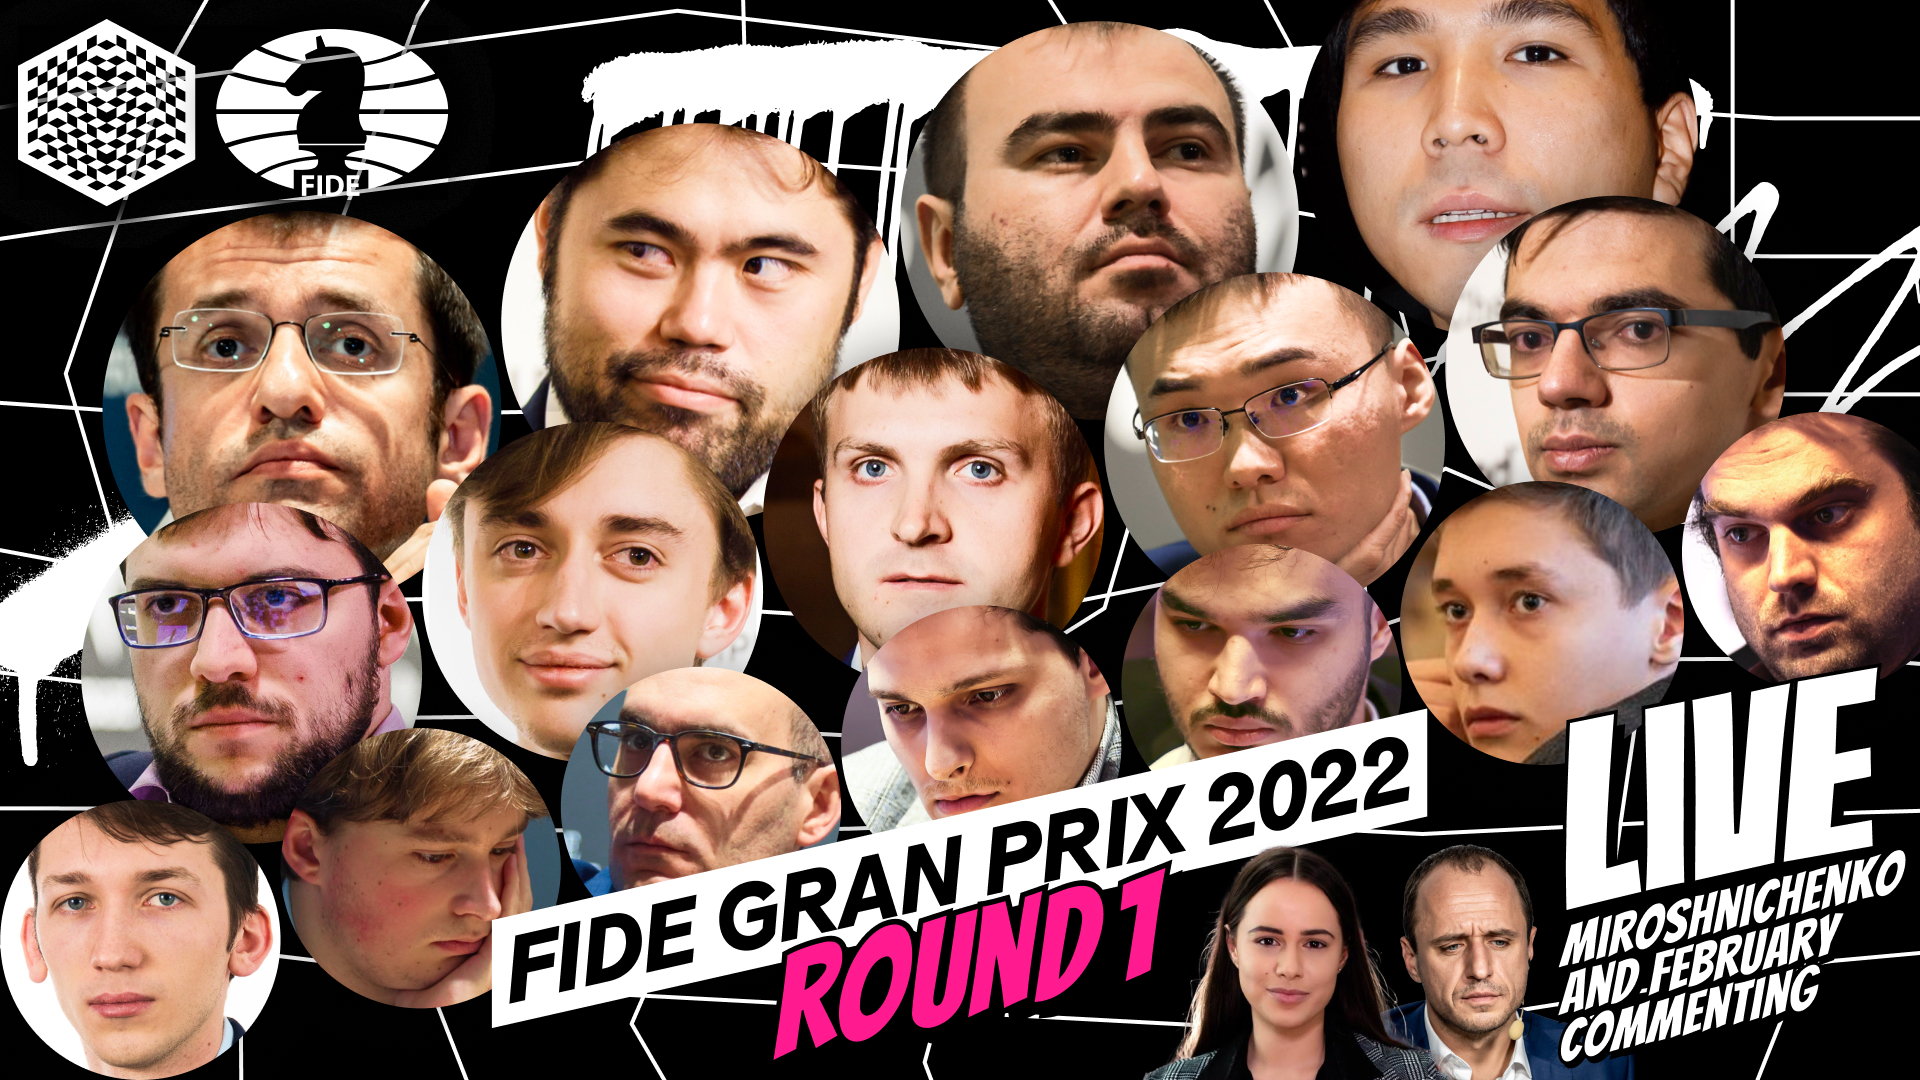 FIDE Grand Prix Series 2022, EXCLUSIVE INTERVIEWS with Dina Belenkaya